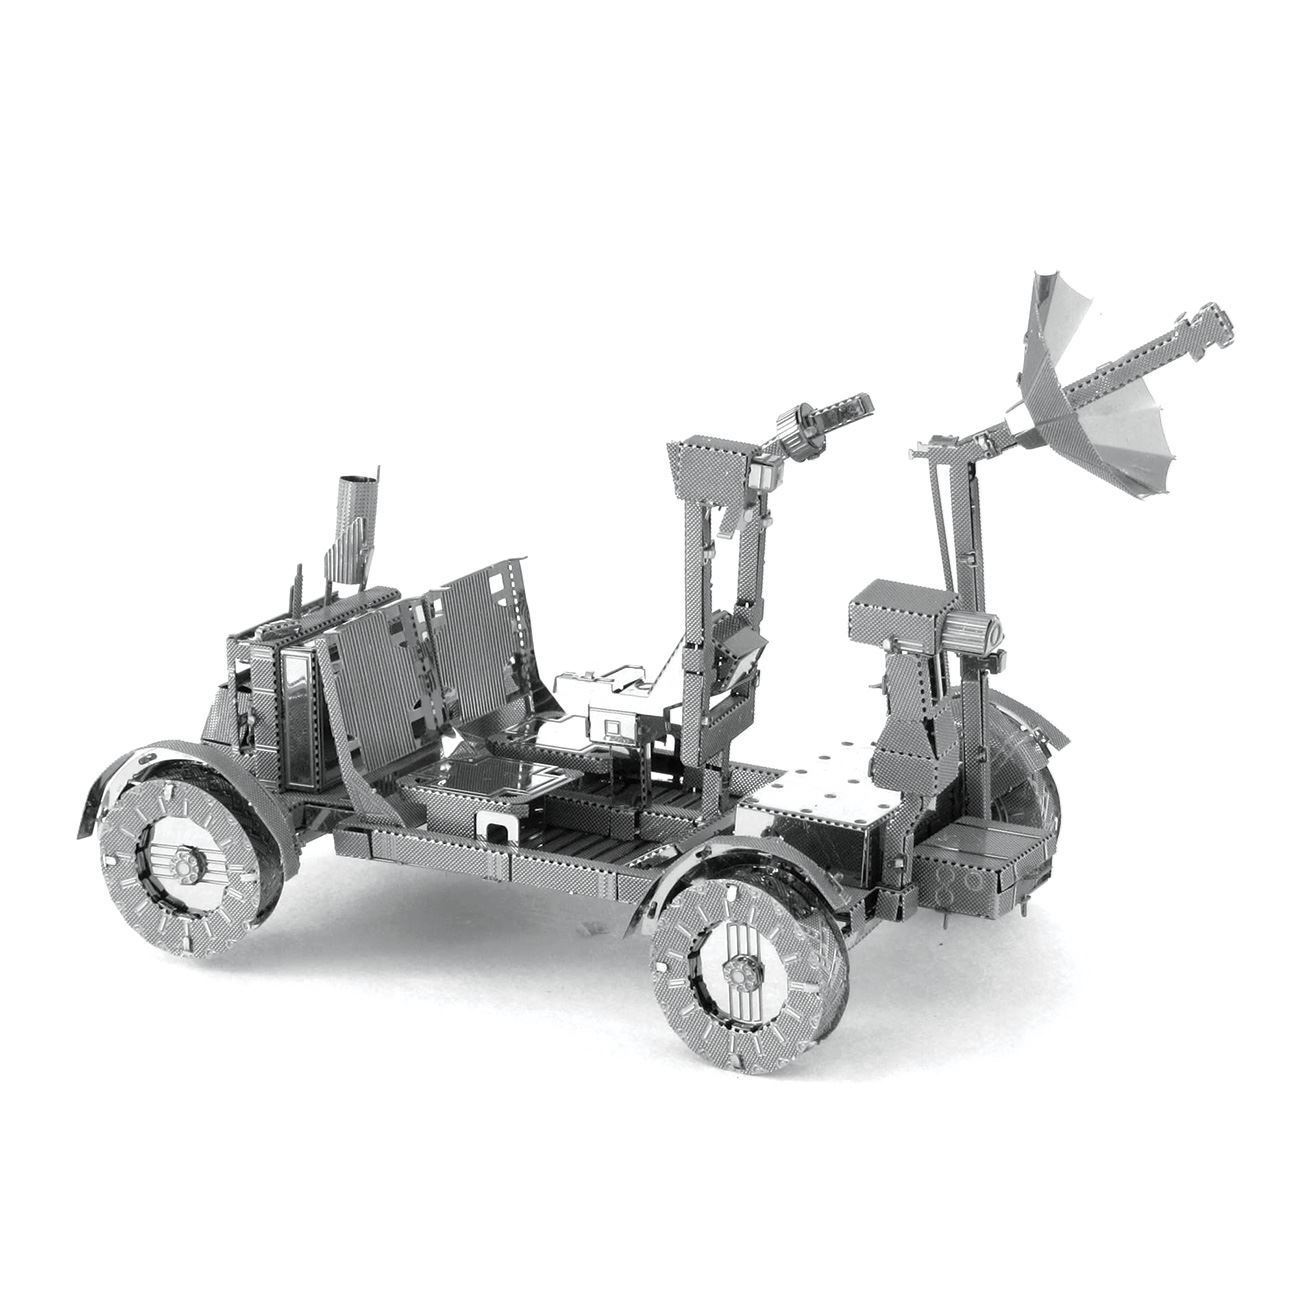 Apollo Lunar Rover 3D Metal Earth Model Kit Assemble New! 